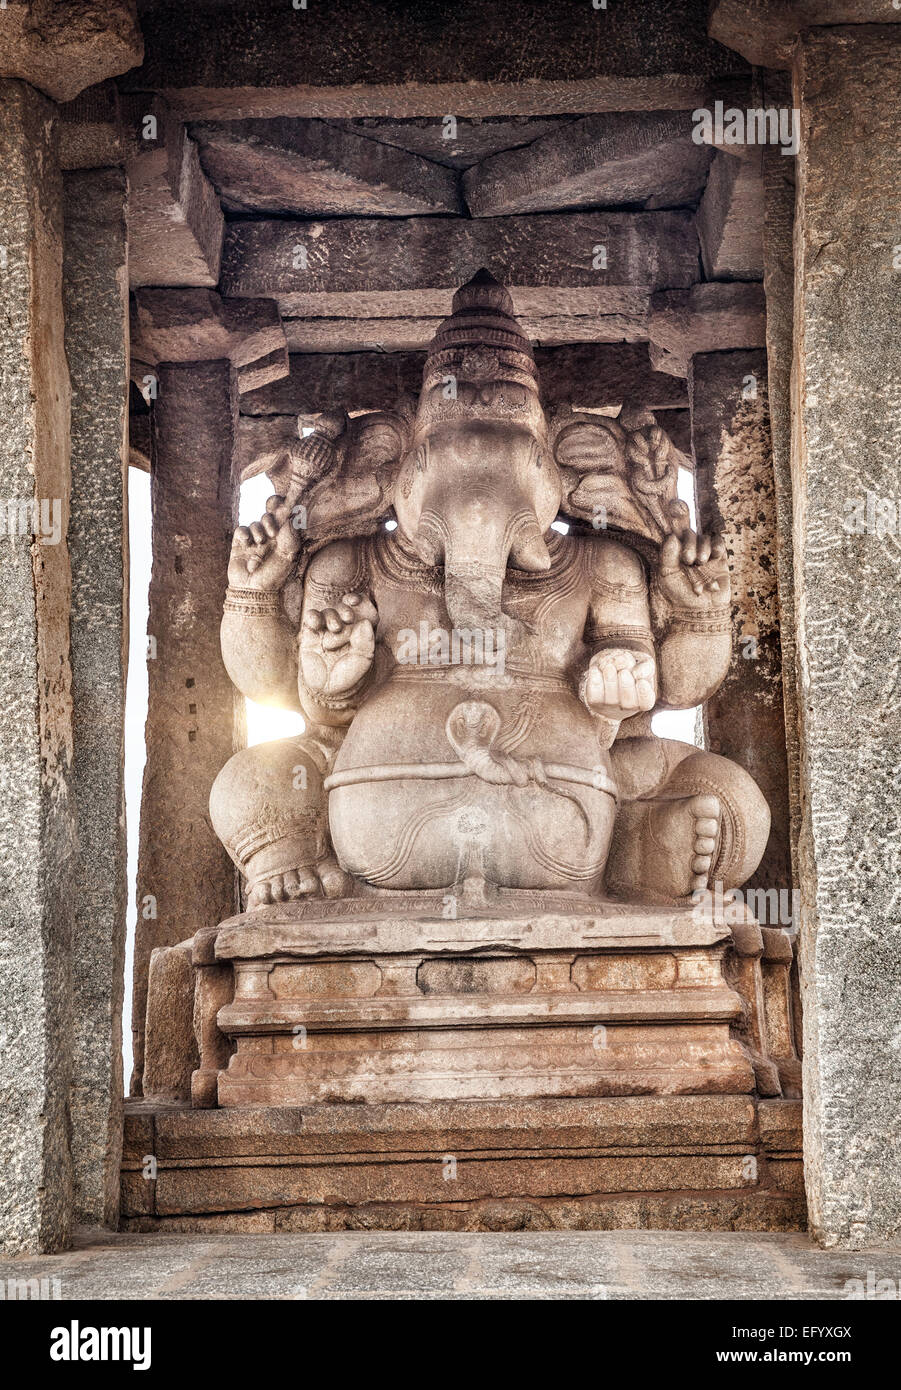 Ganesh statue in the ancient temple of Hampi, Karnataka, India Stock Photo